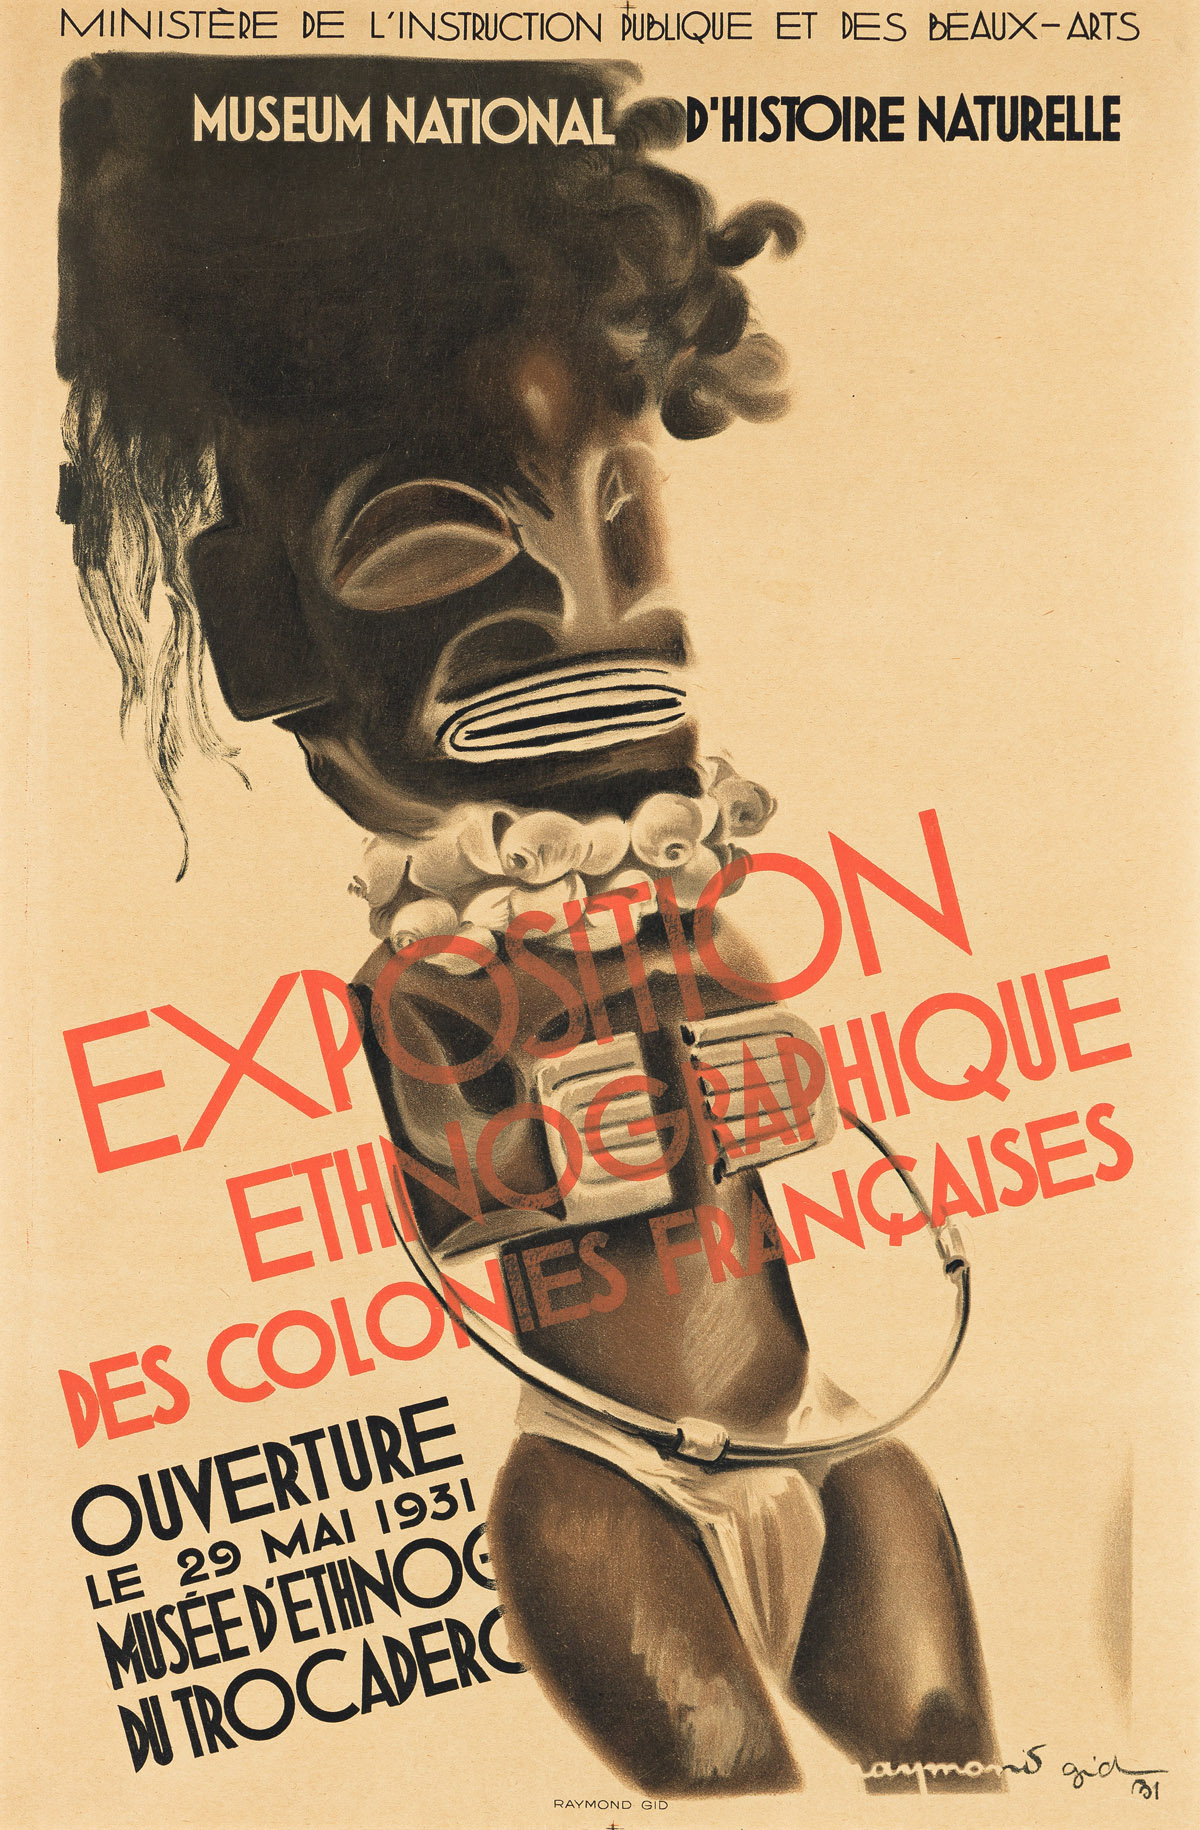 RAYMOND GID (1905-2000).  EXPOSITION ETHNOGRAPHIQUE DES COLONIES. 1931. 23½x15½ inches, 59½x39¼ cm. Raymond Gid.